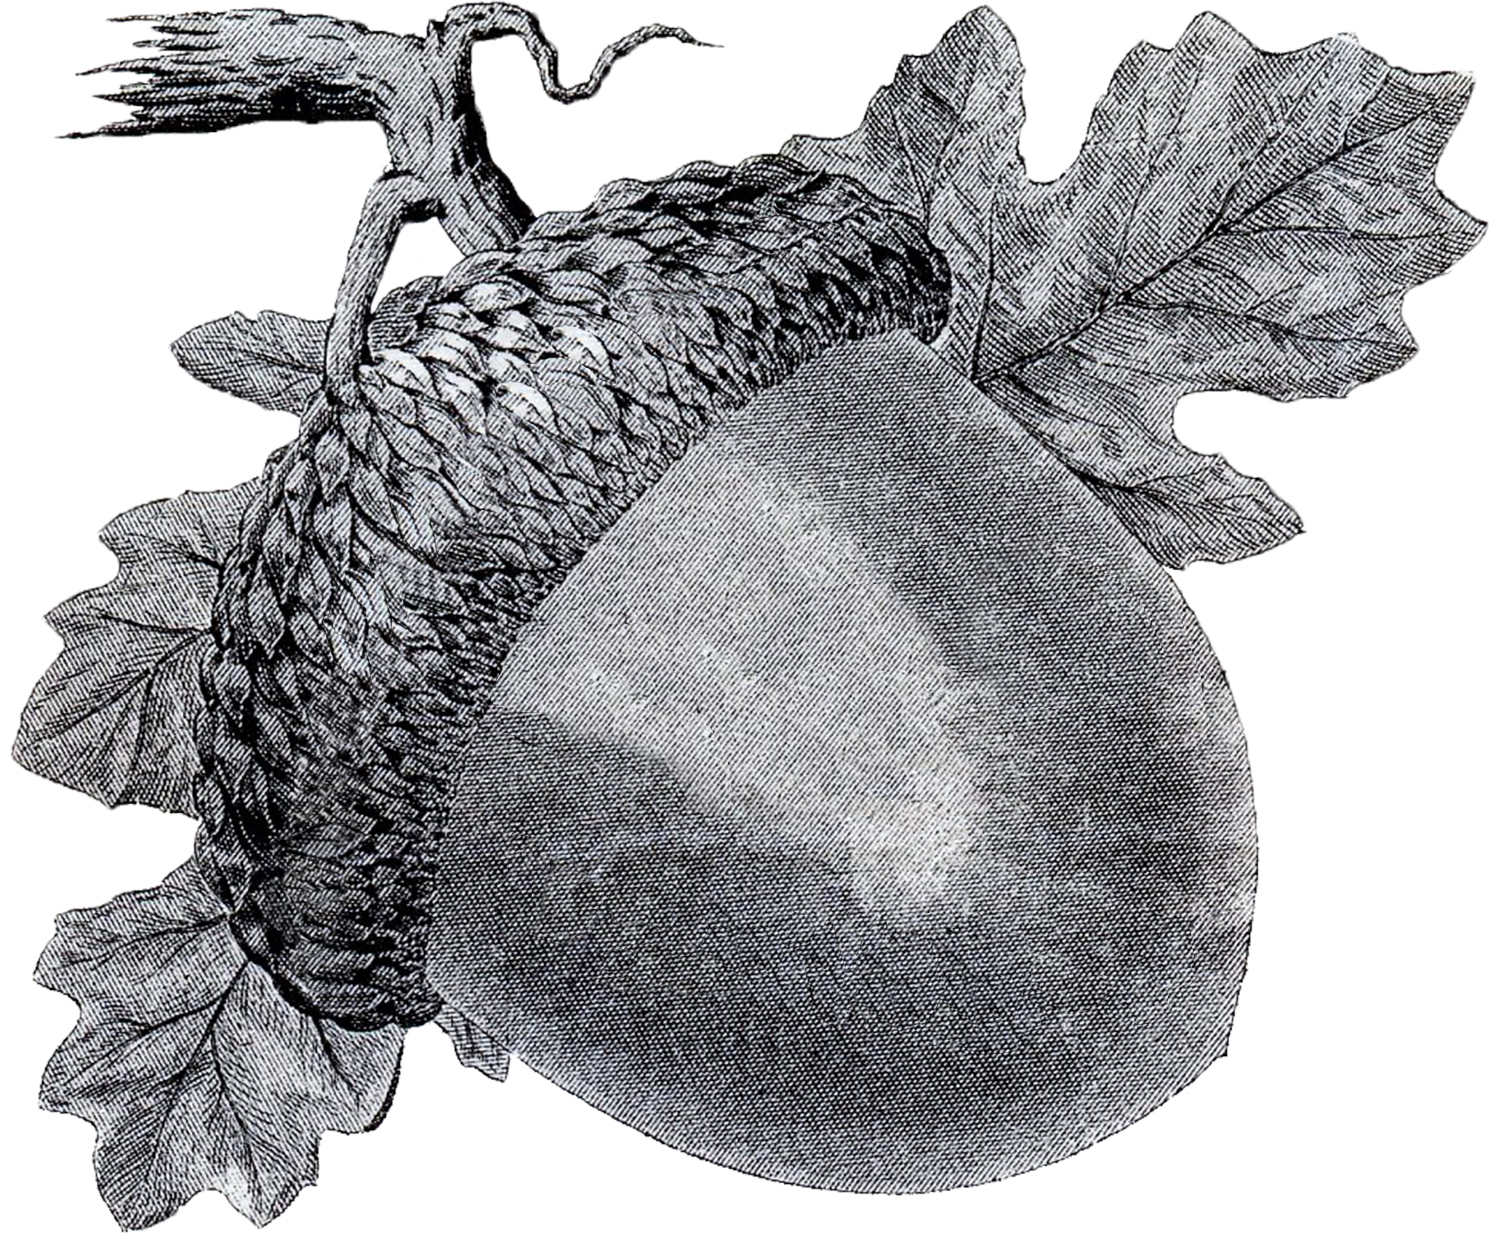 acorns and leaves clip art